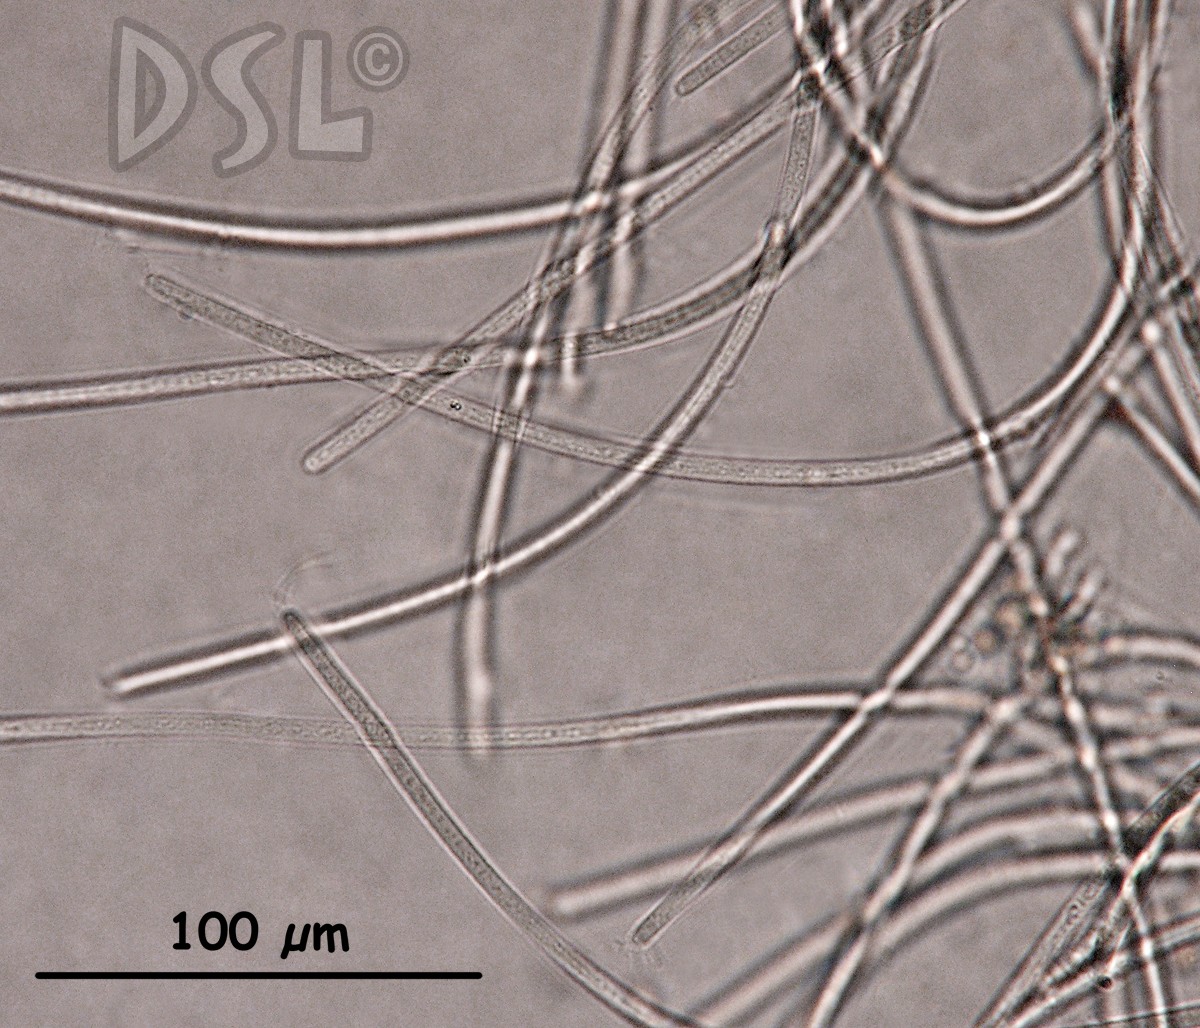 Phormidium laysanense image